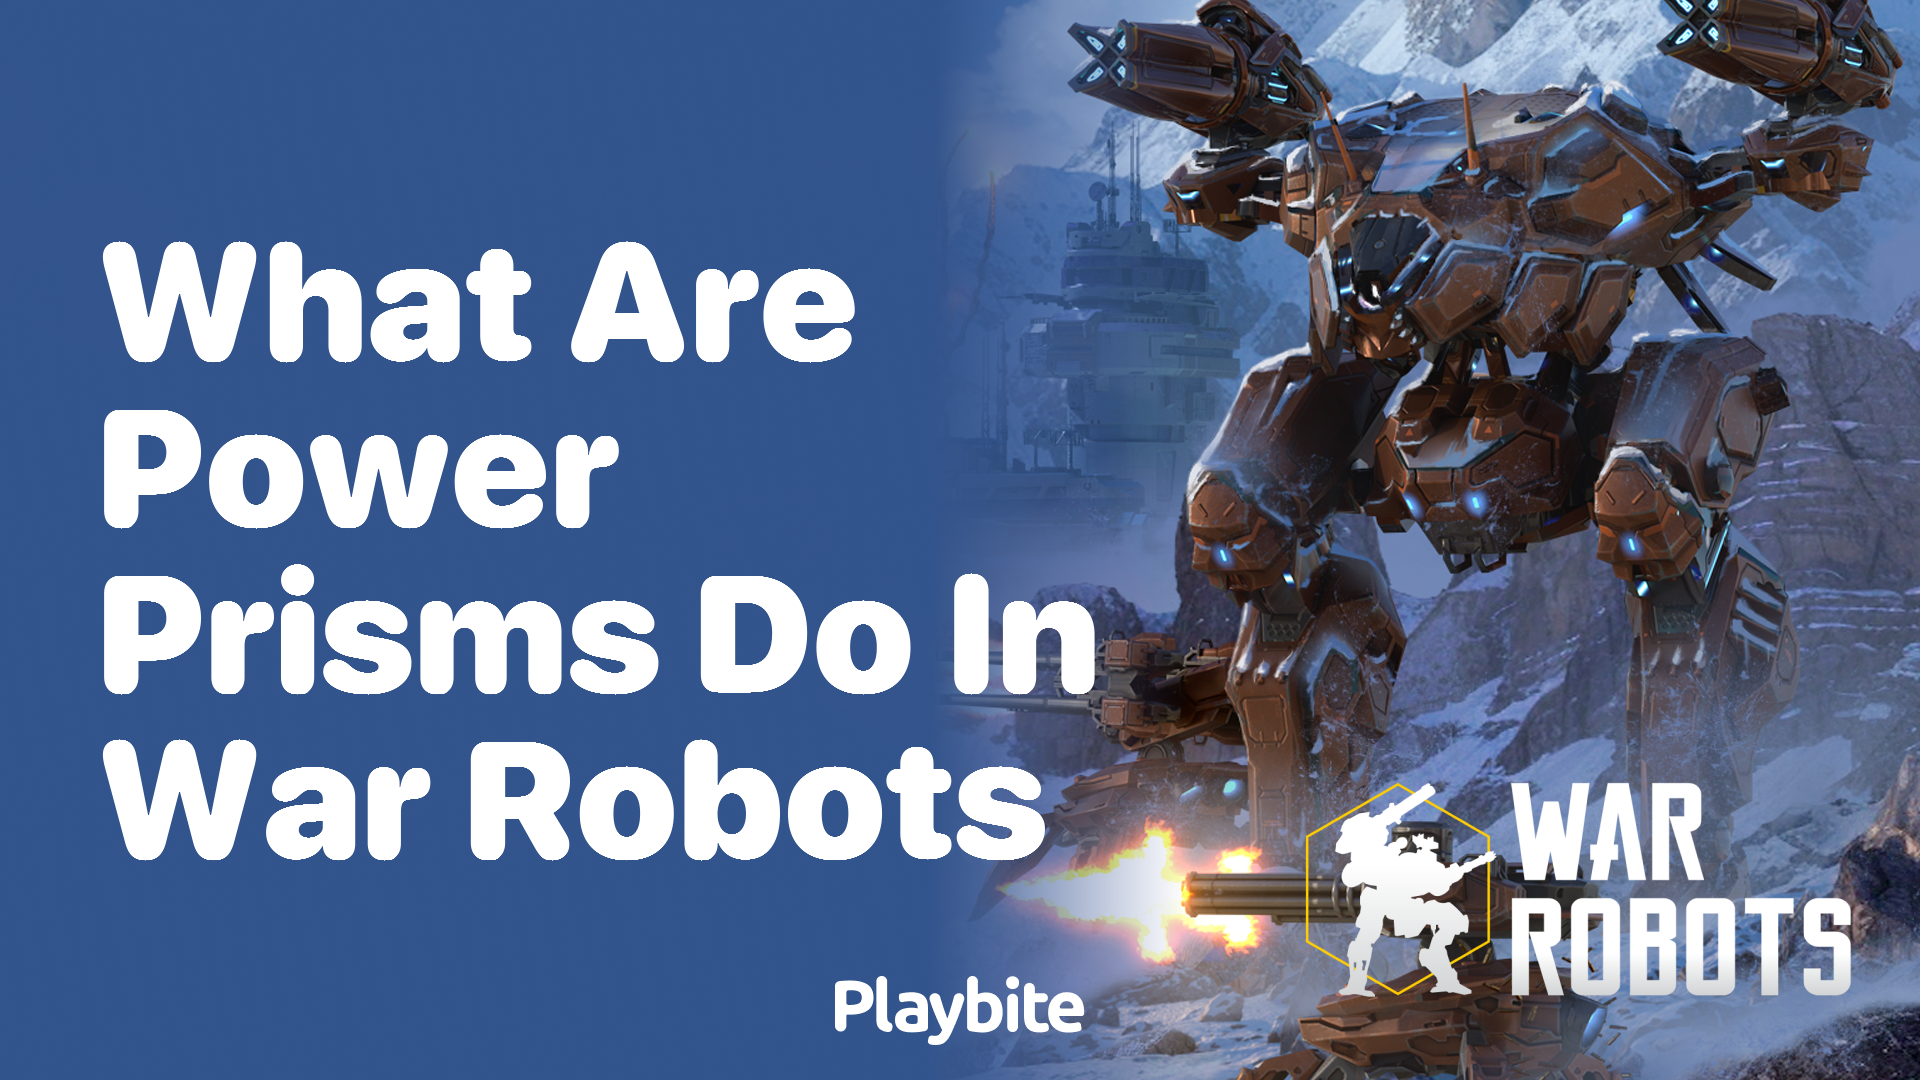 What Do Power Prisms Do in War Robots?